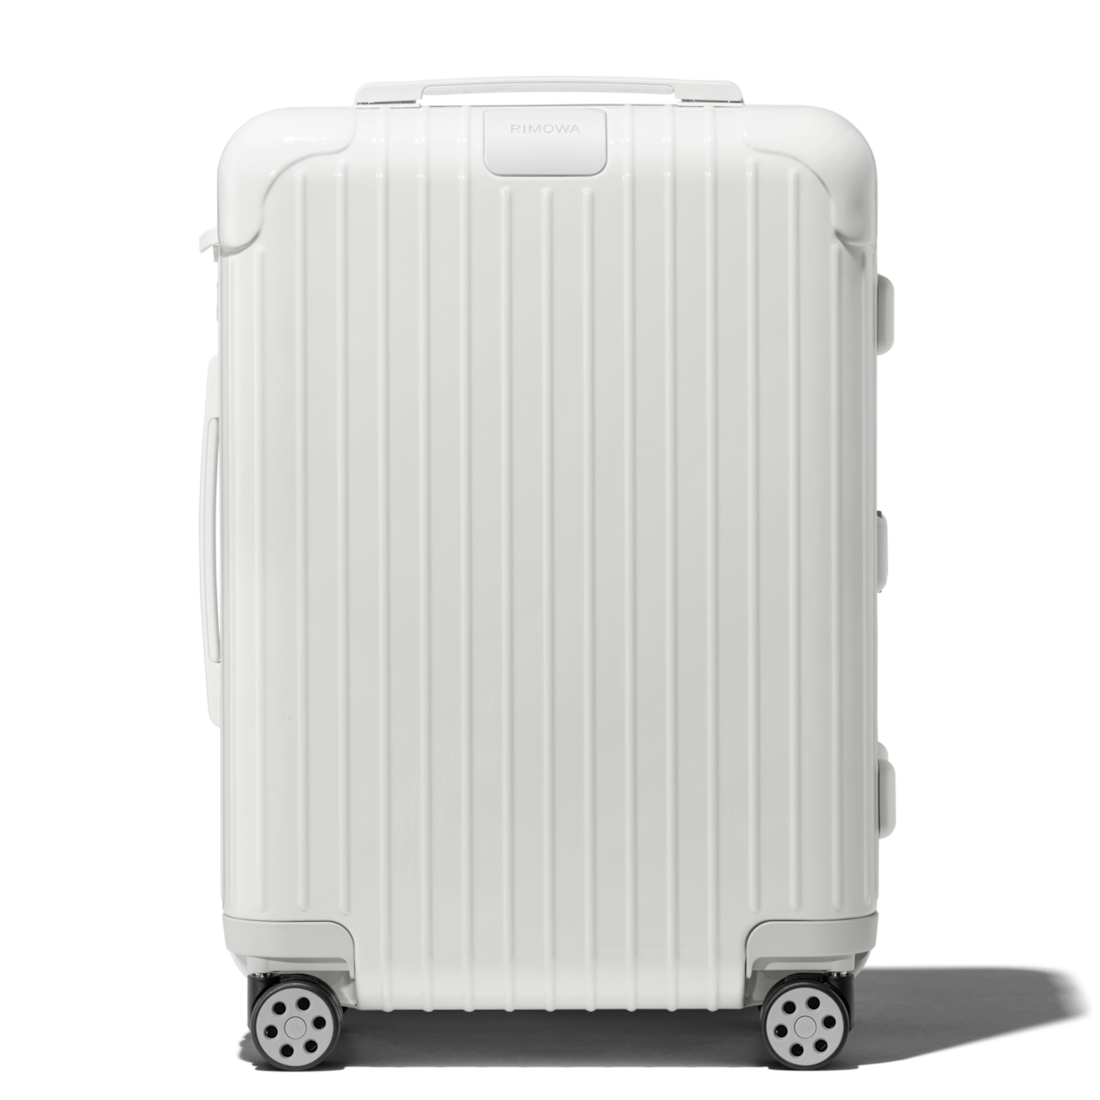 rimowa small luggage size